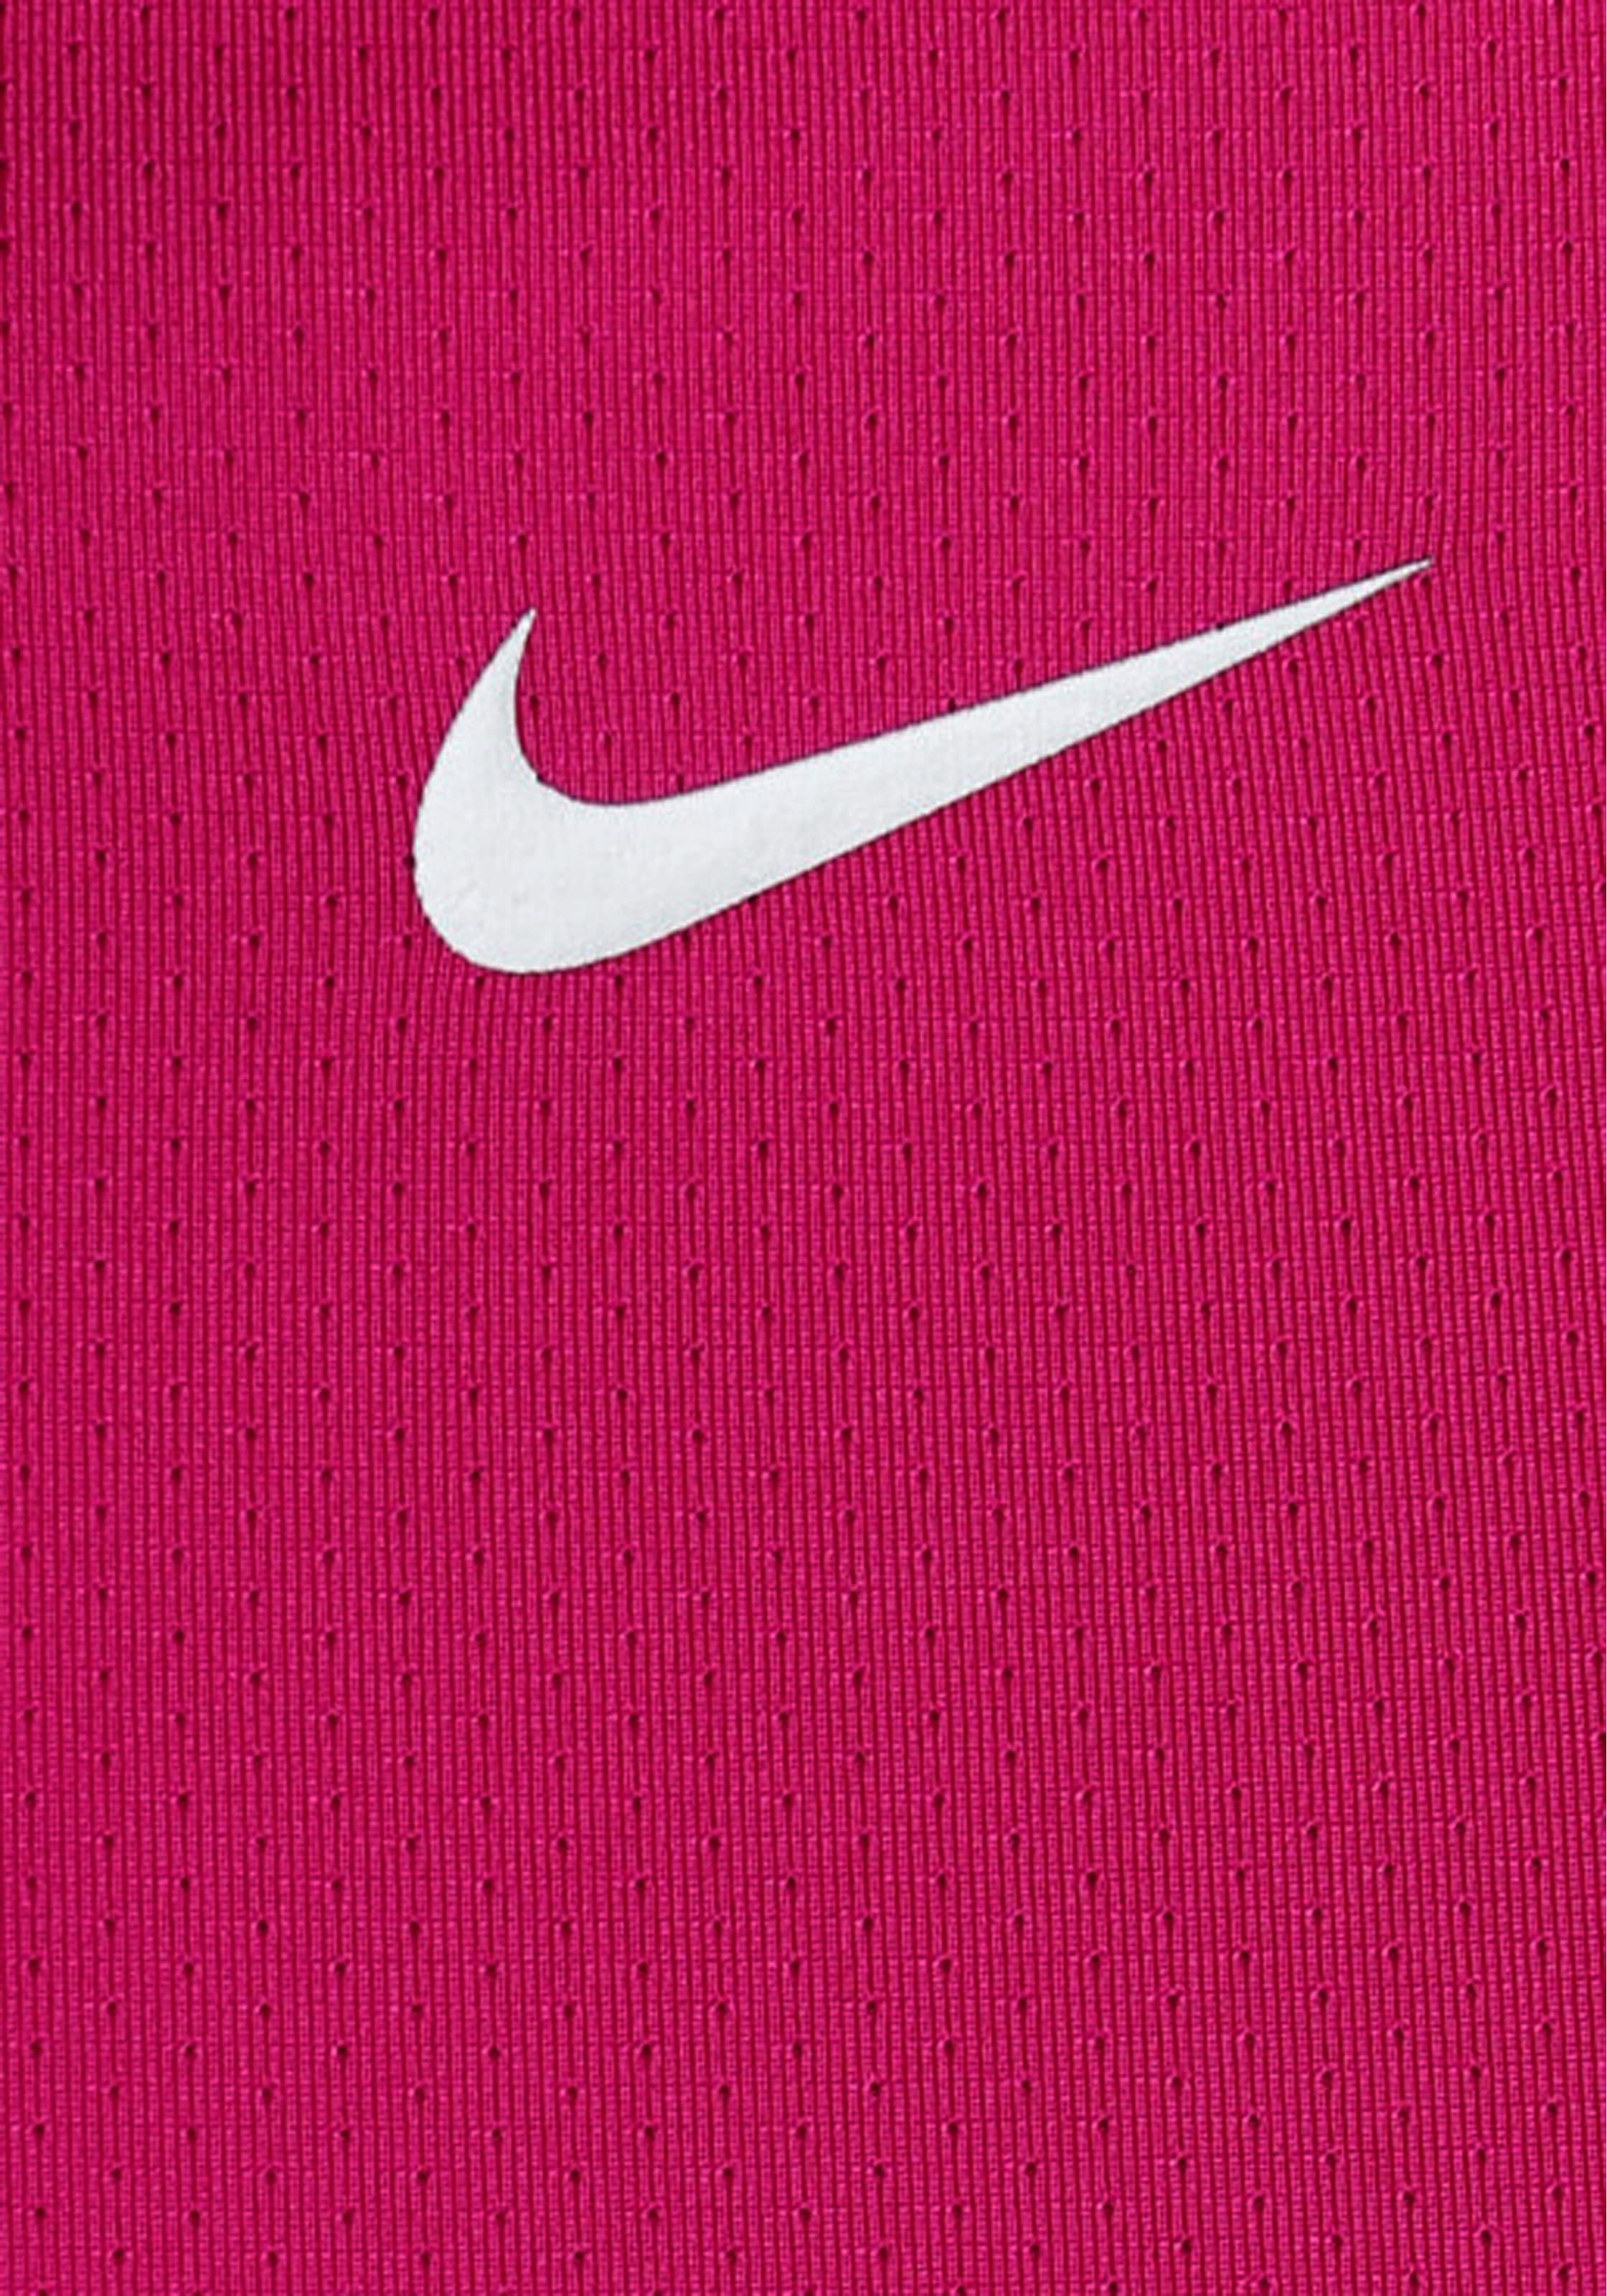 »WOMEN SHORTSLEEVE DRI-FIT TOP OVER kaufen ALL NIKE Nike PERFORMANCE Funktionsshirt Technology MESH«,